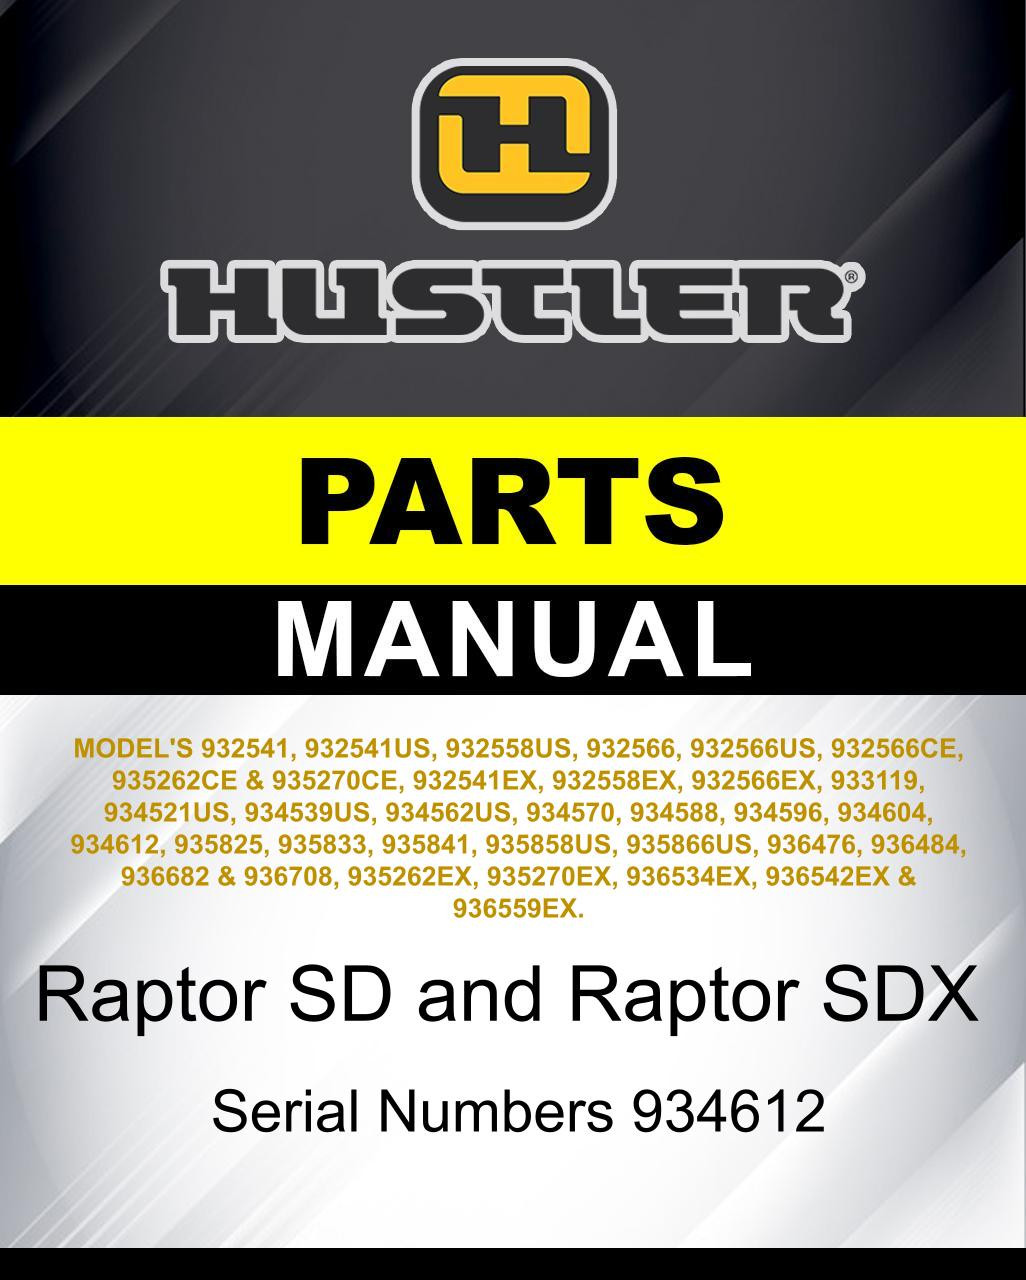 Hustler Raptor SD and Raptor SDX SN 934612 parts manual | Hustler 